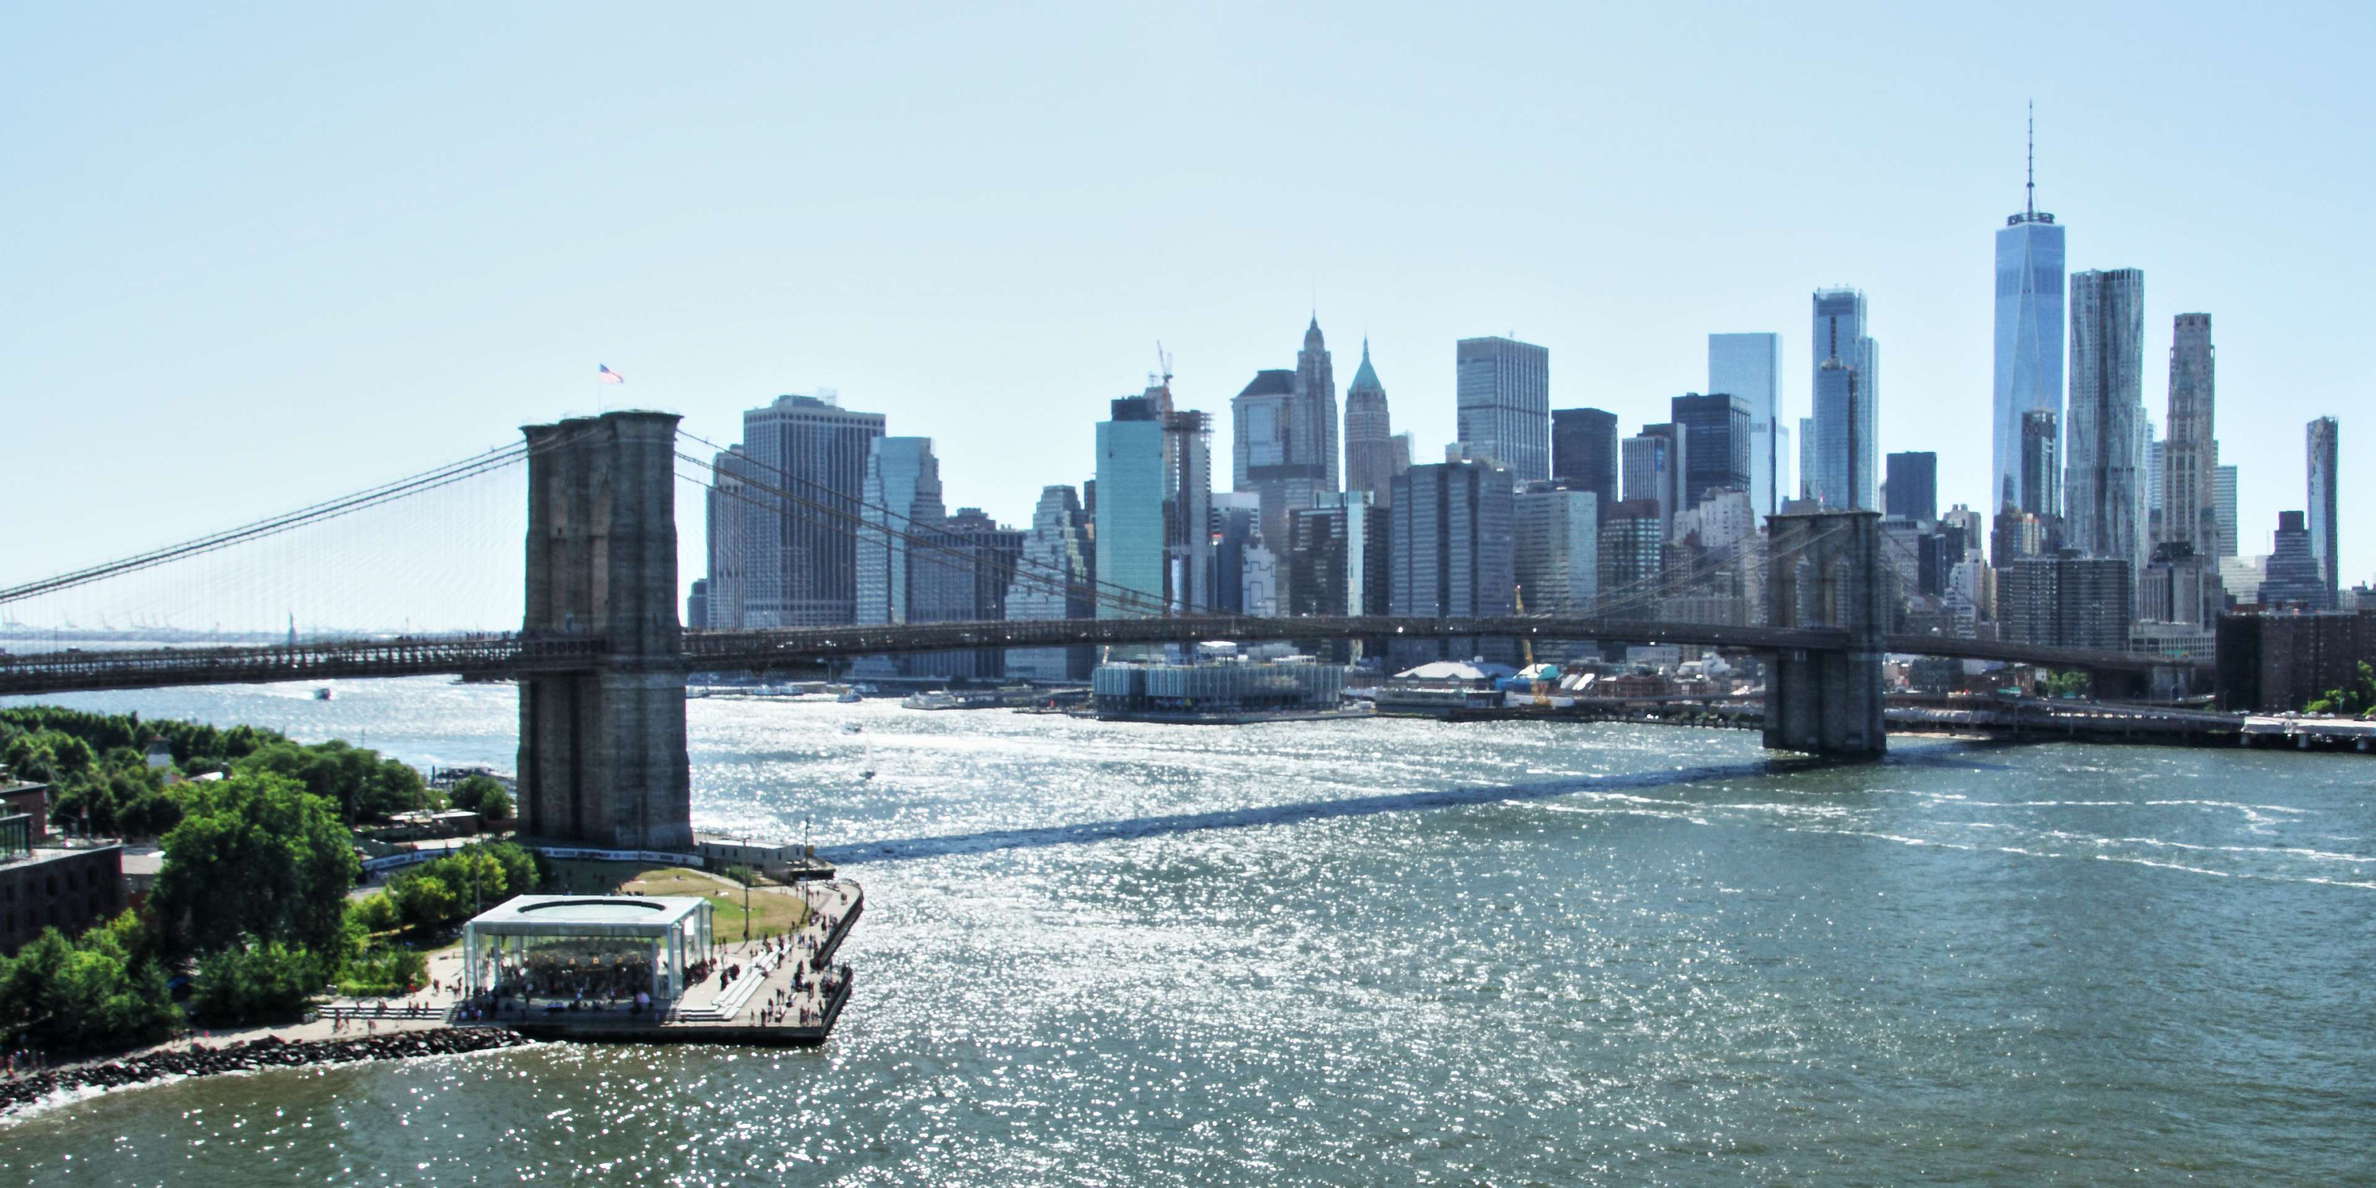 Brooklyn Bridge and Lower Manhattan